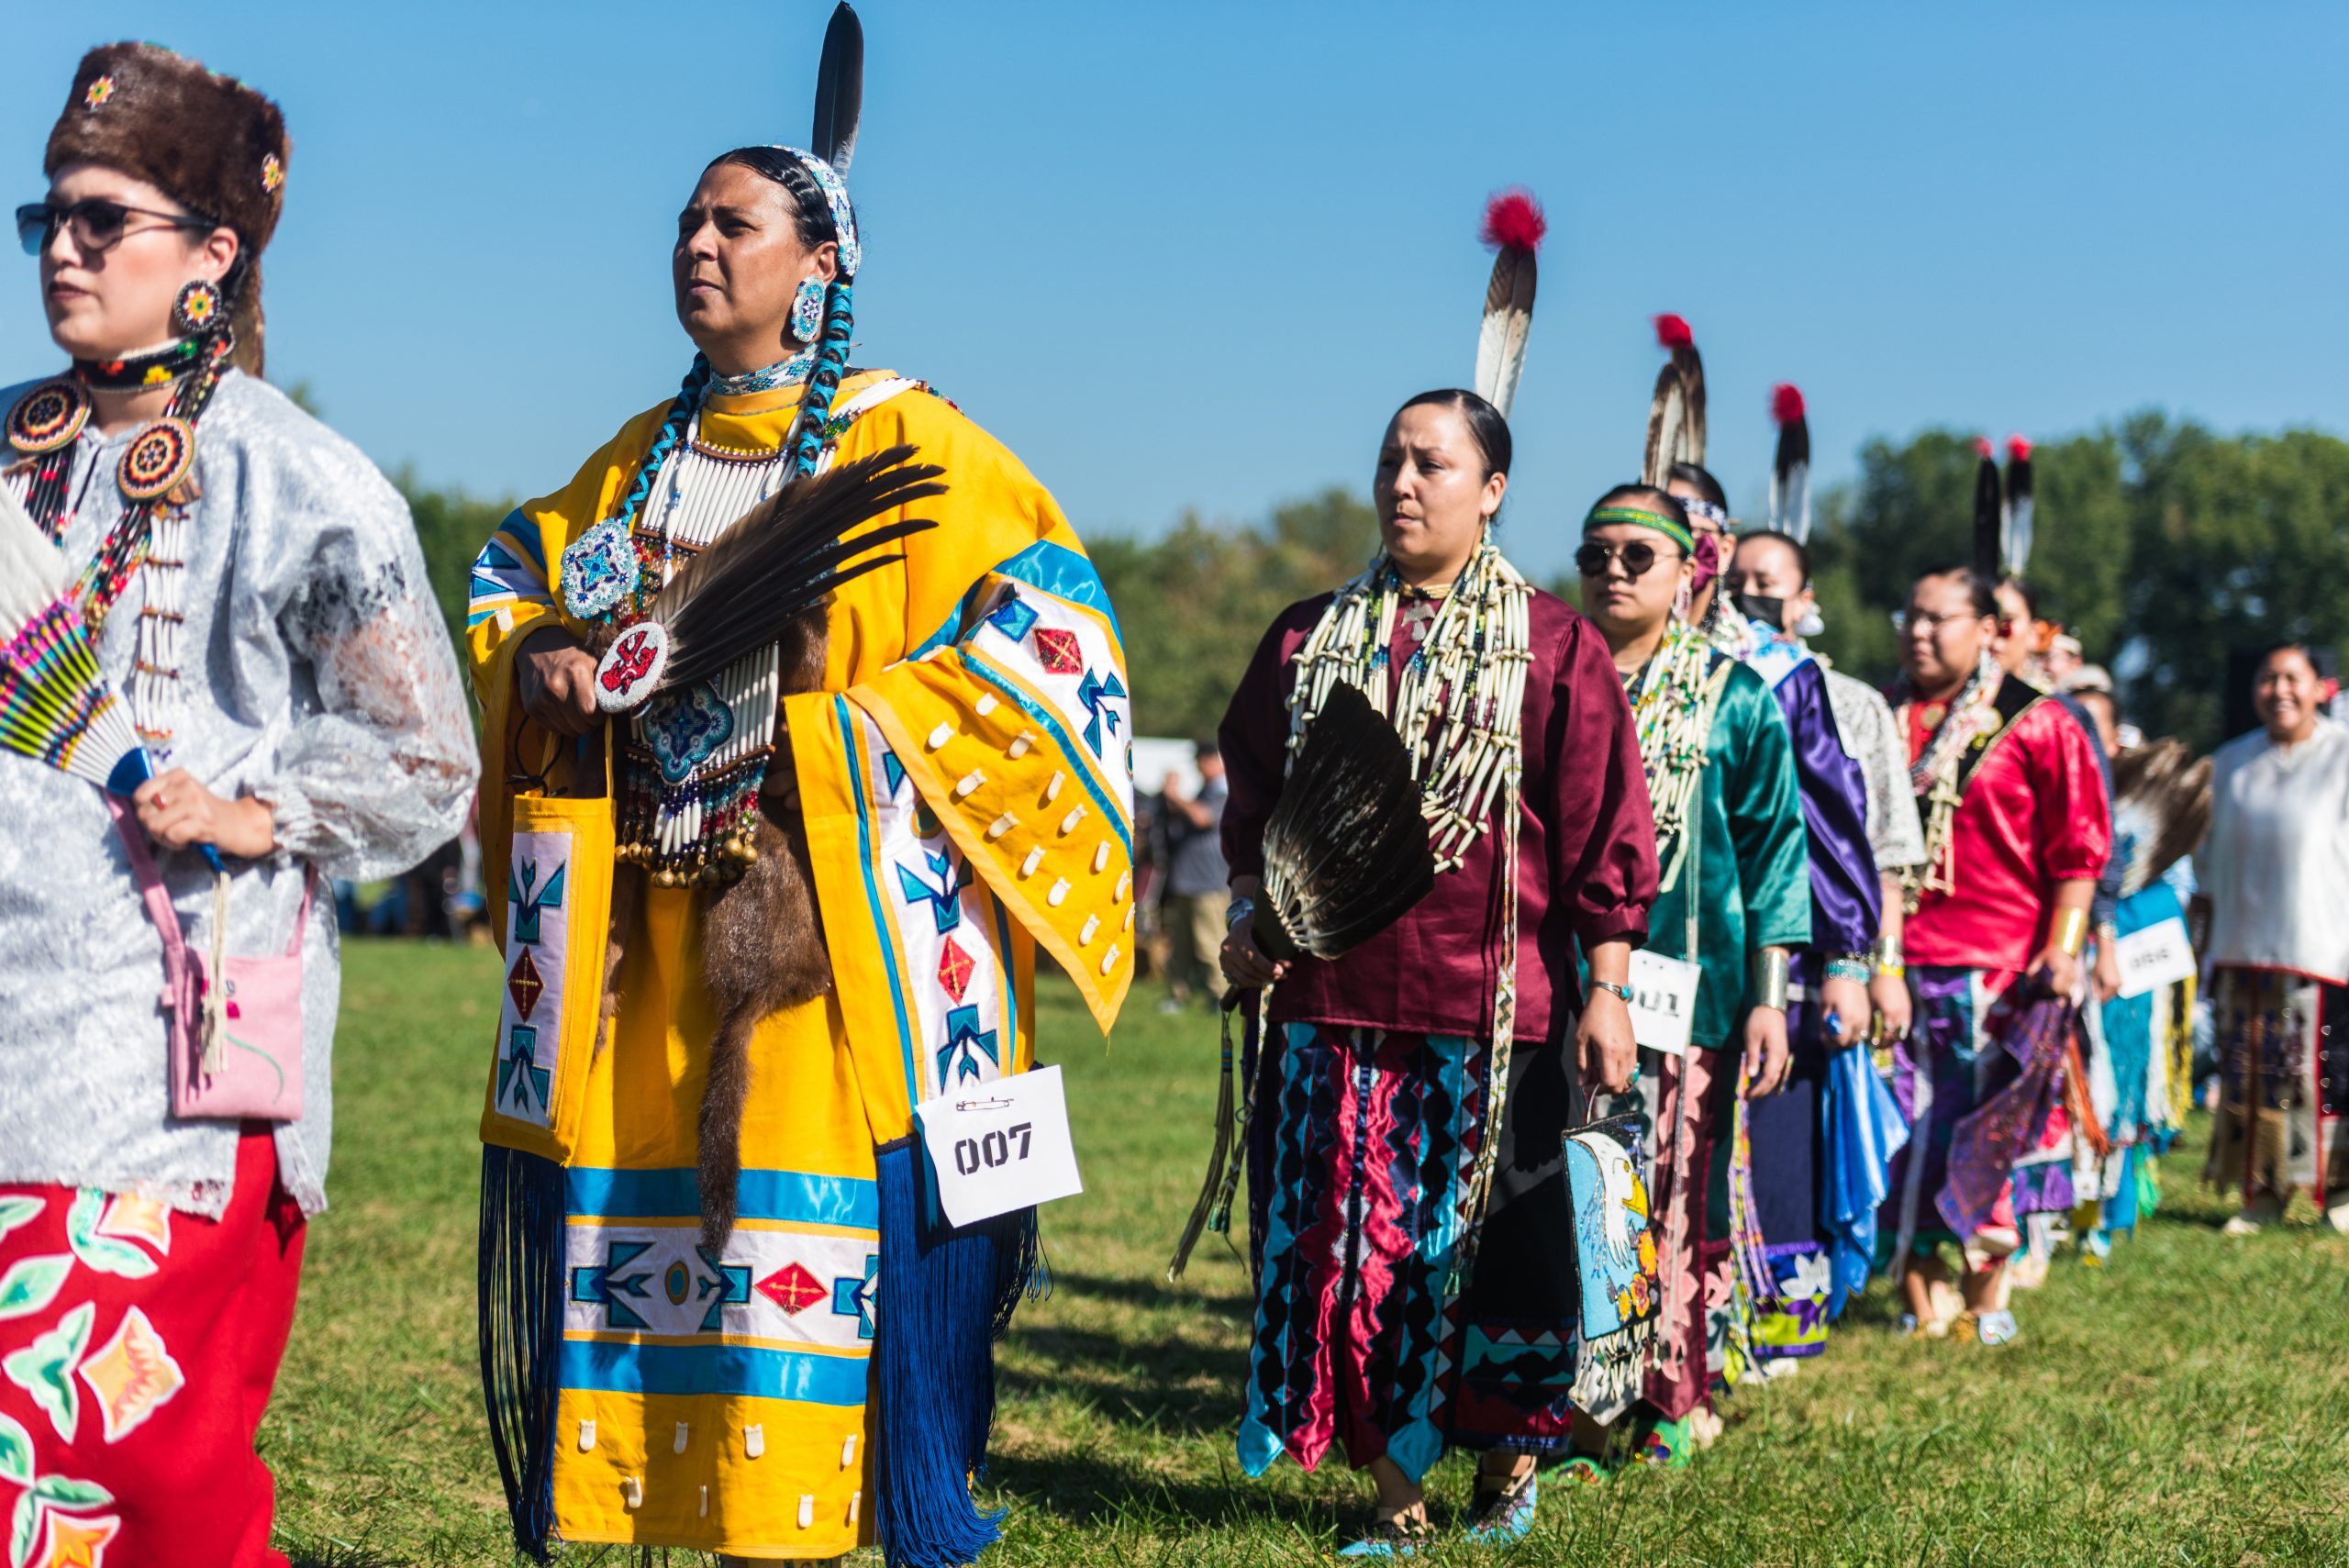 Women in Indigenous American clothing